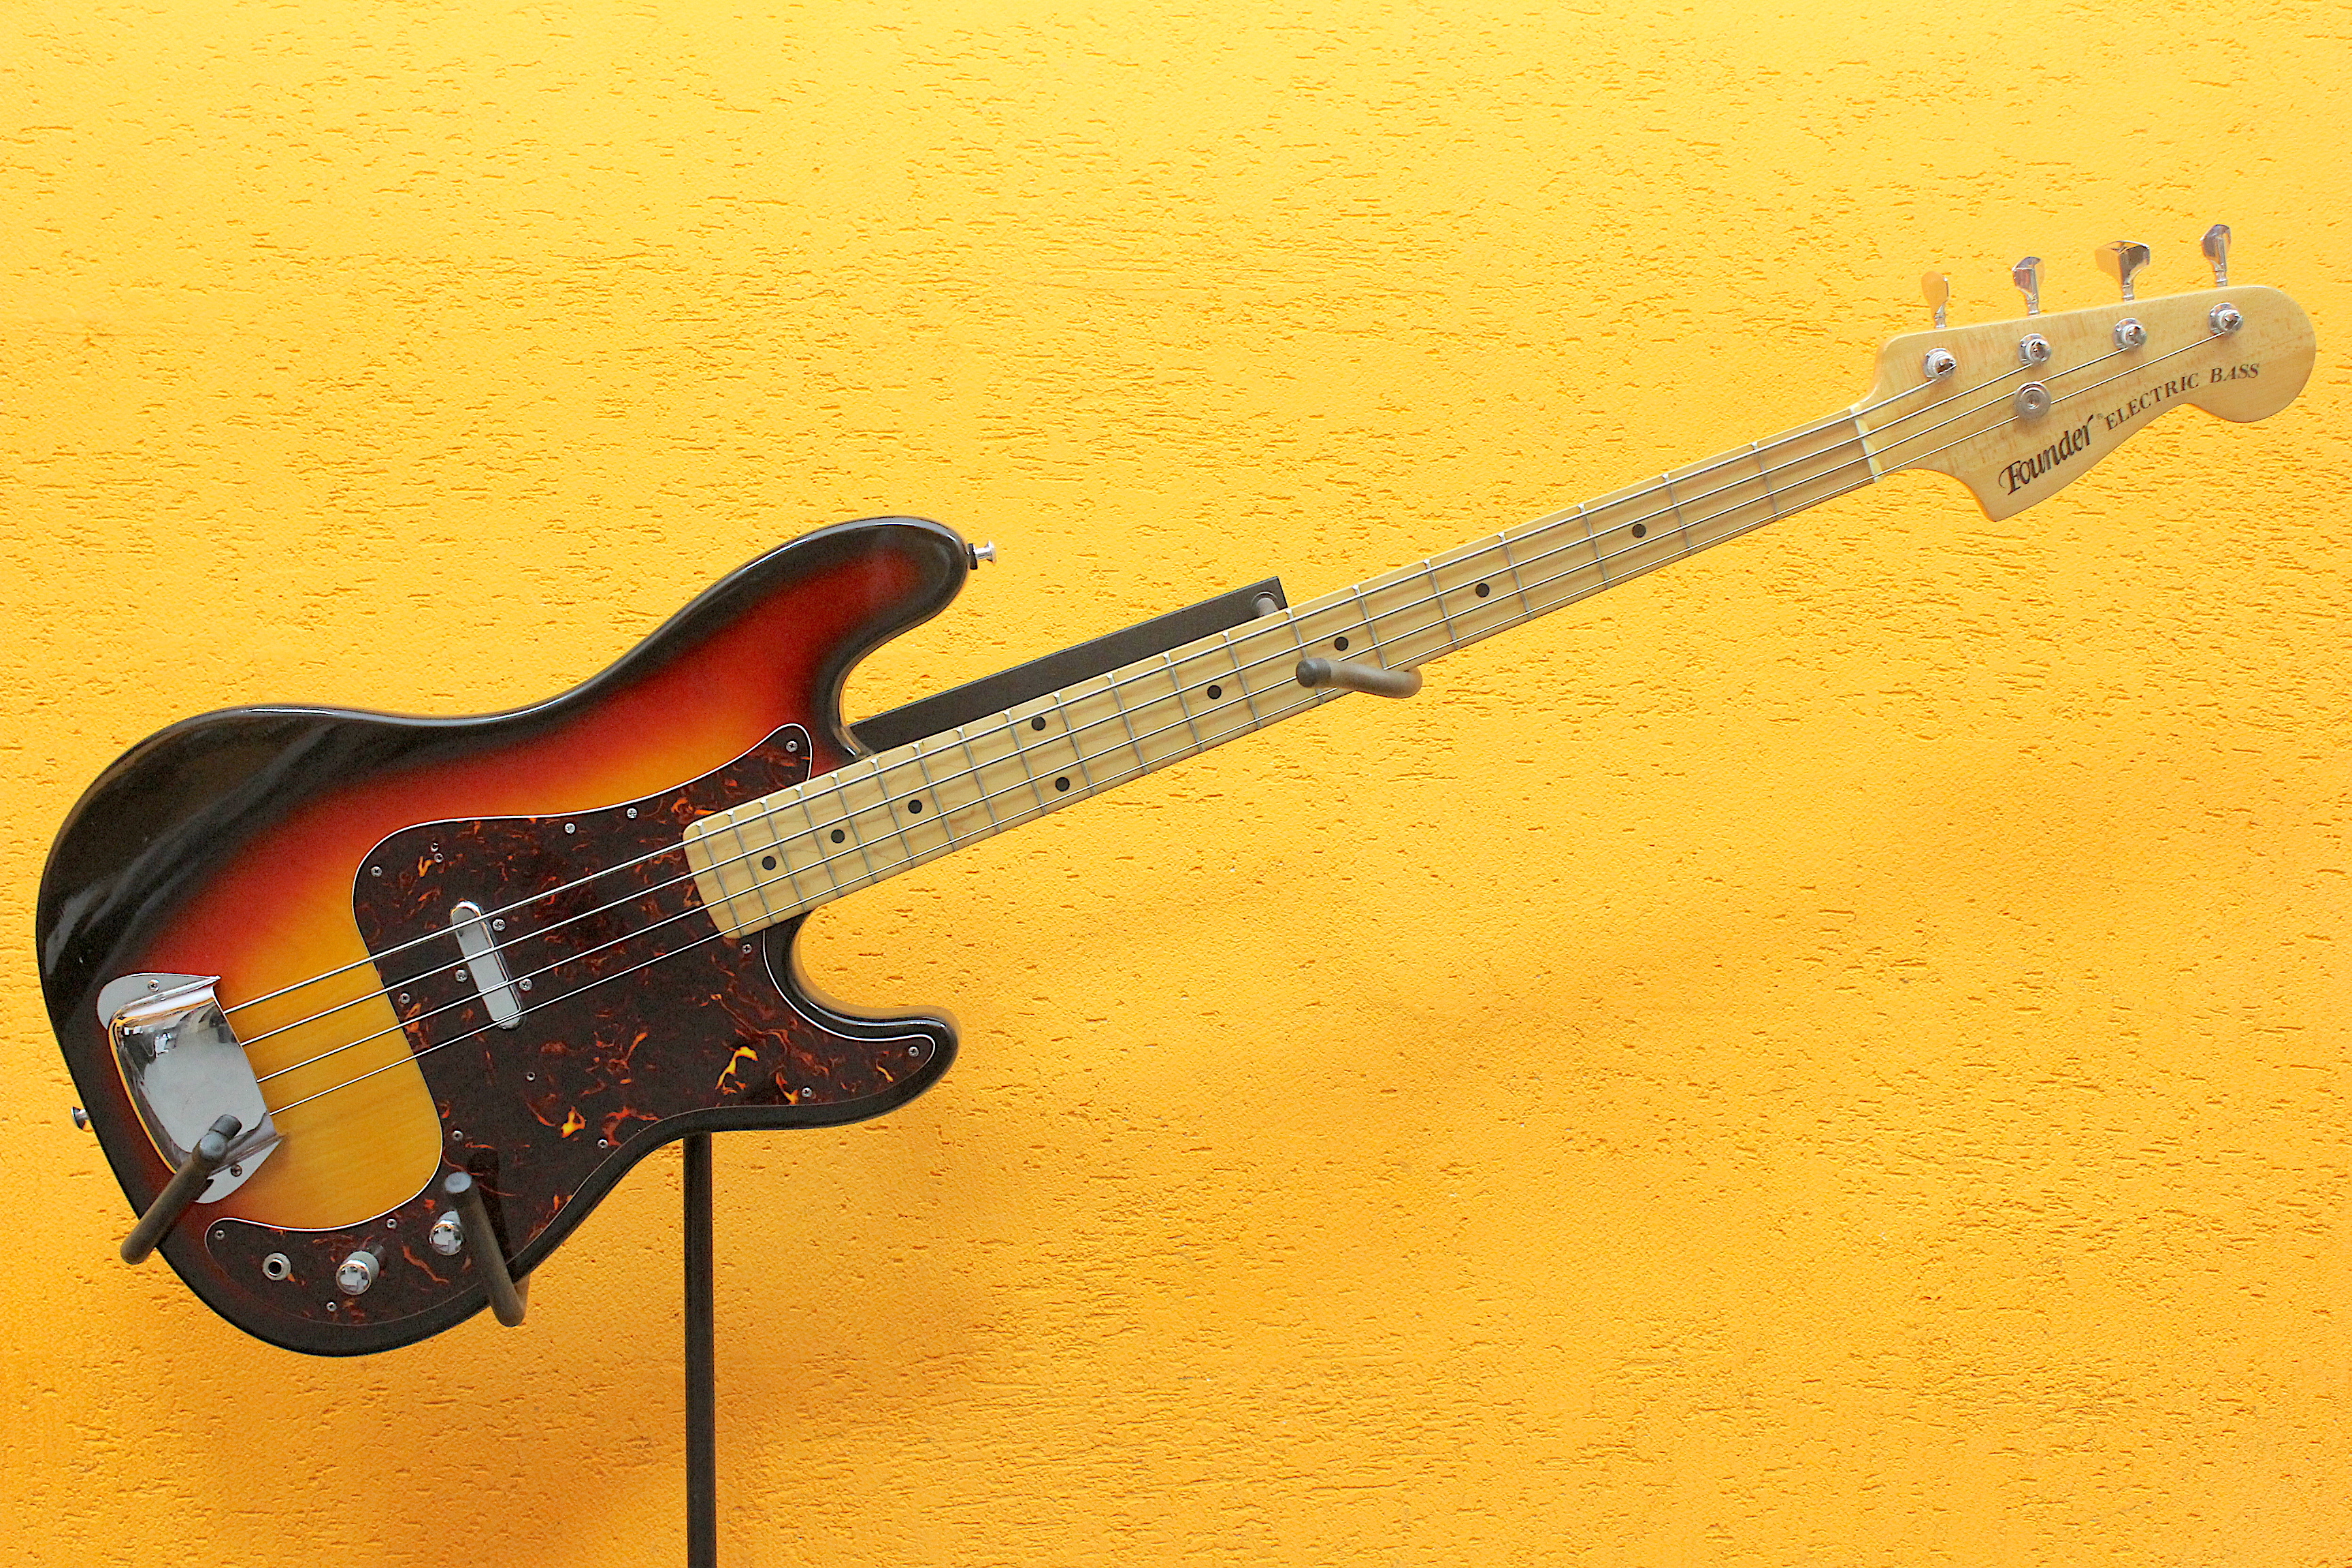 Басс 21. Greco PJB-300 Precision Bass. SX Precision Bass. Precision Bass альтернативный форма. Rockdale Precision Bass.